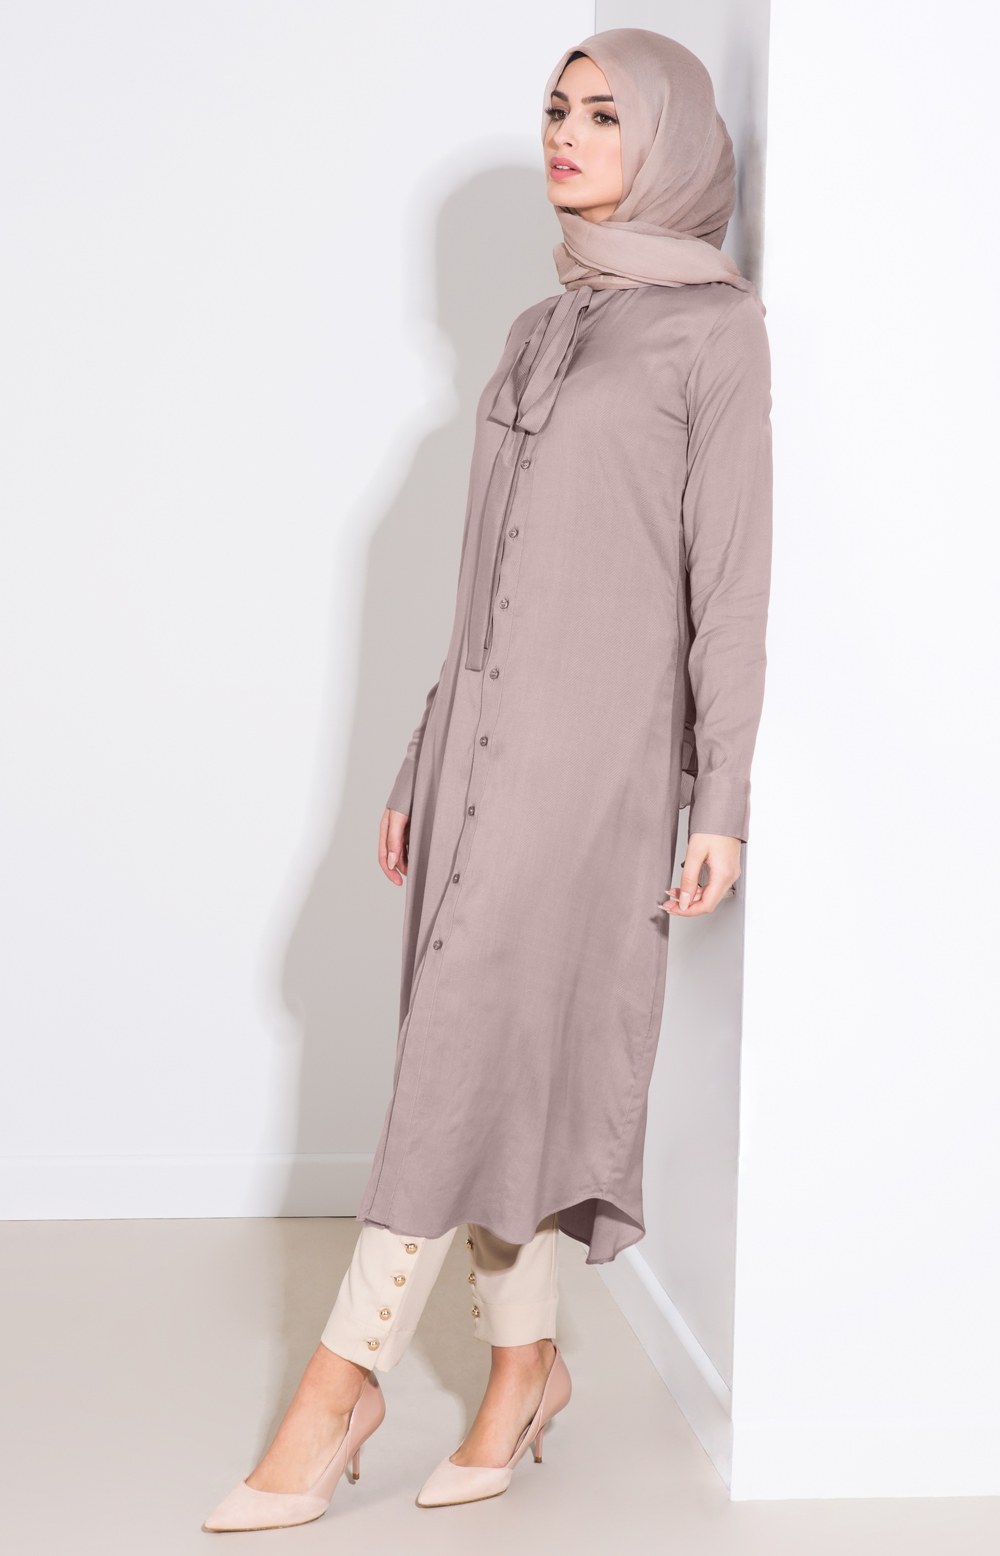 Bentuk Model Baju Lebaran Wanita Terbaru E6d5 25 Trend Model Baju Muslim Lebaran 2018 Simple &amp; Modis